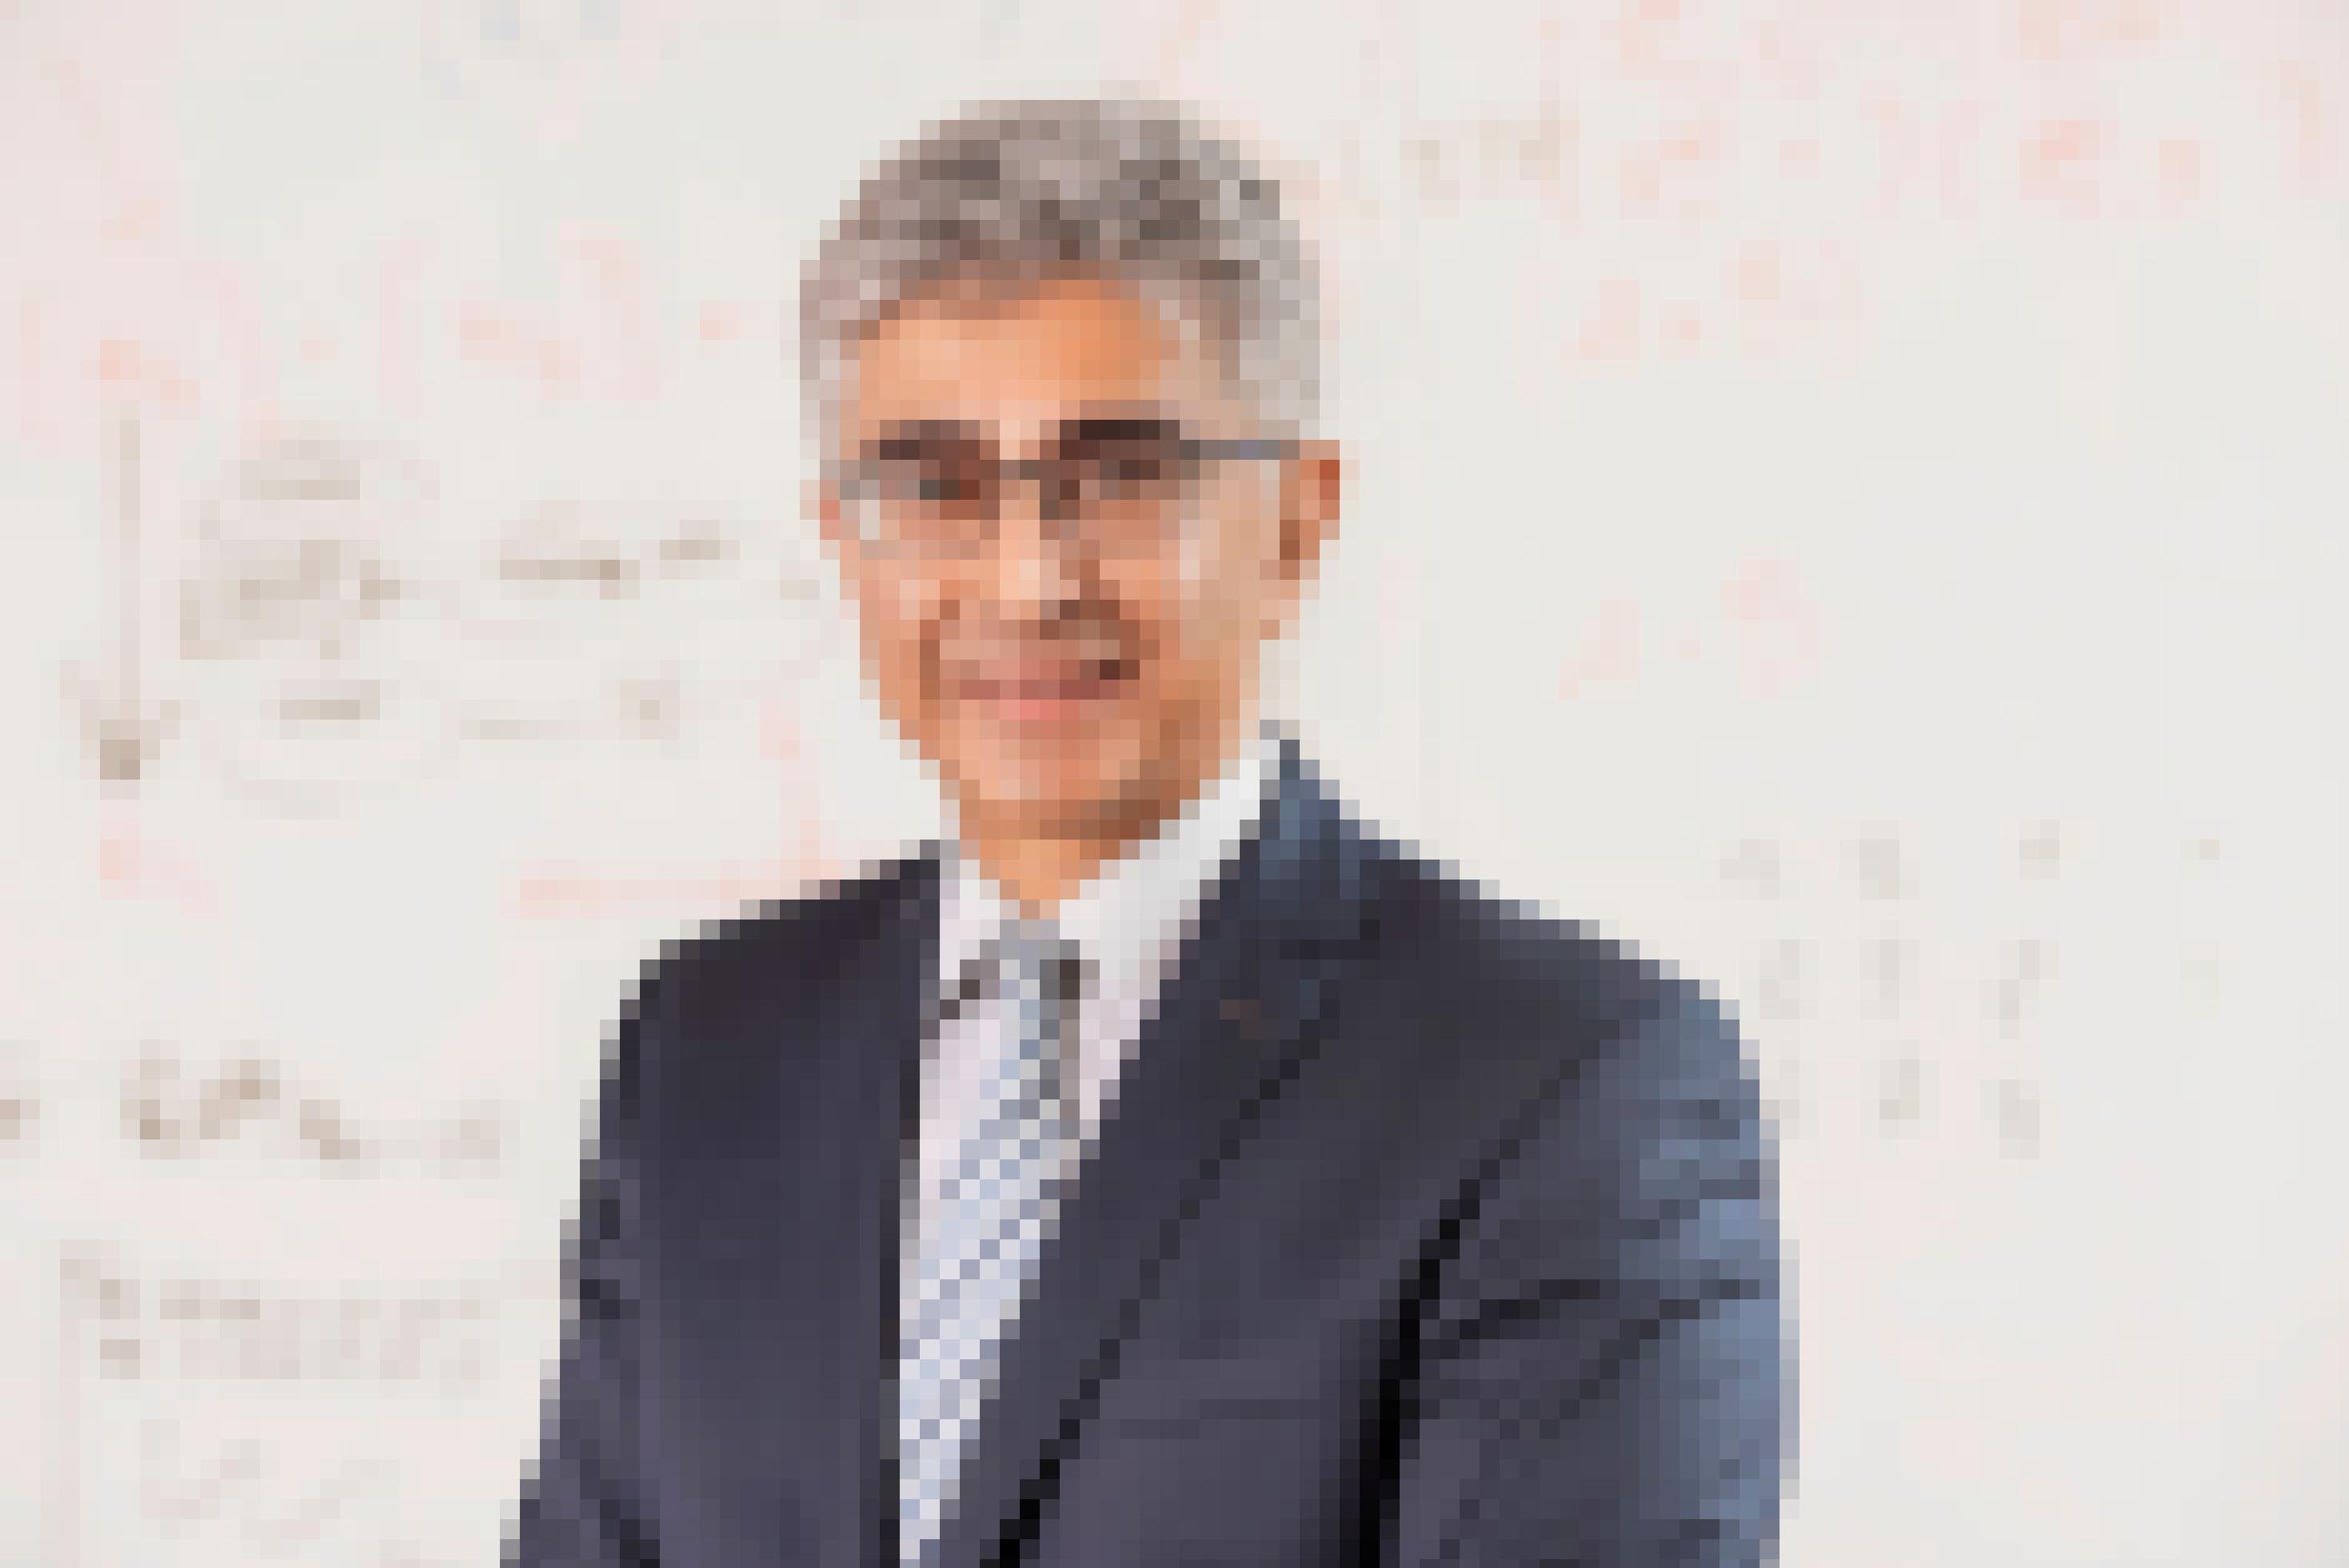 Professor Ahmad Reza-Sadeghi